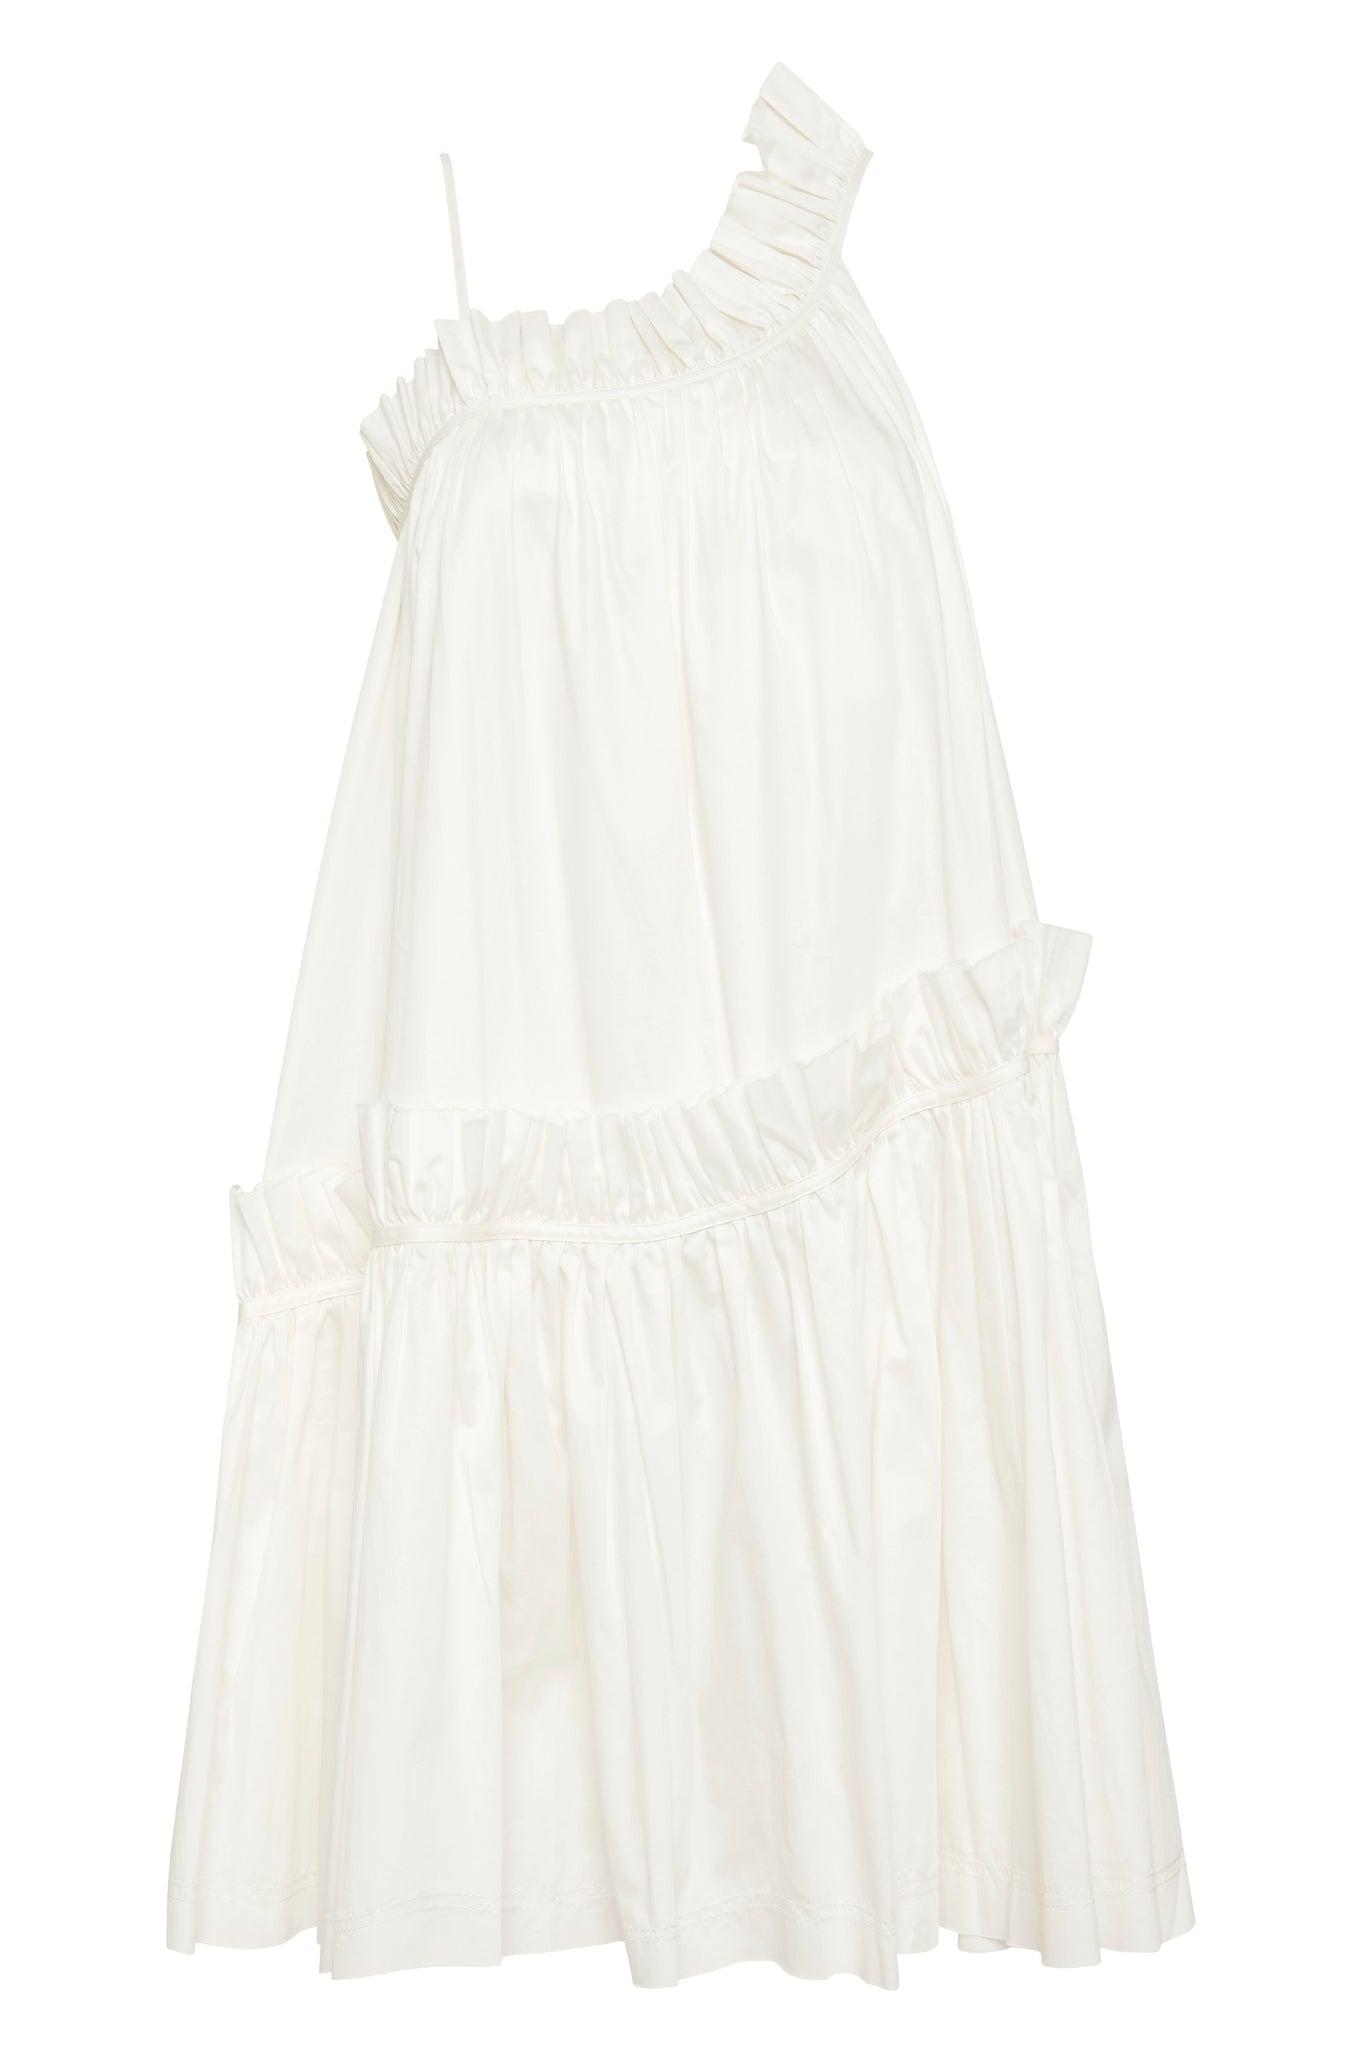 Aje. Cotton Romance Asymmetric Mini Dress in Ivory (White) - Save 